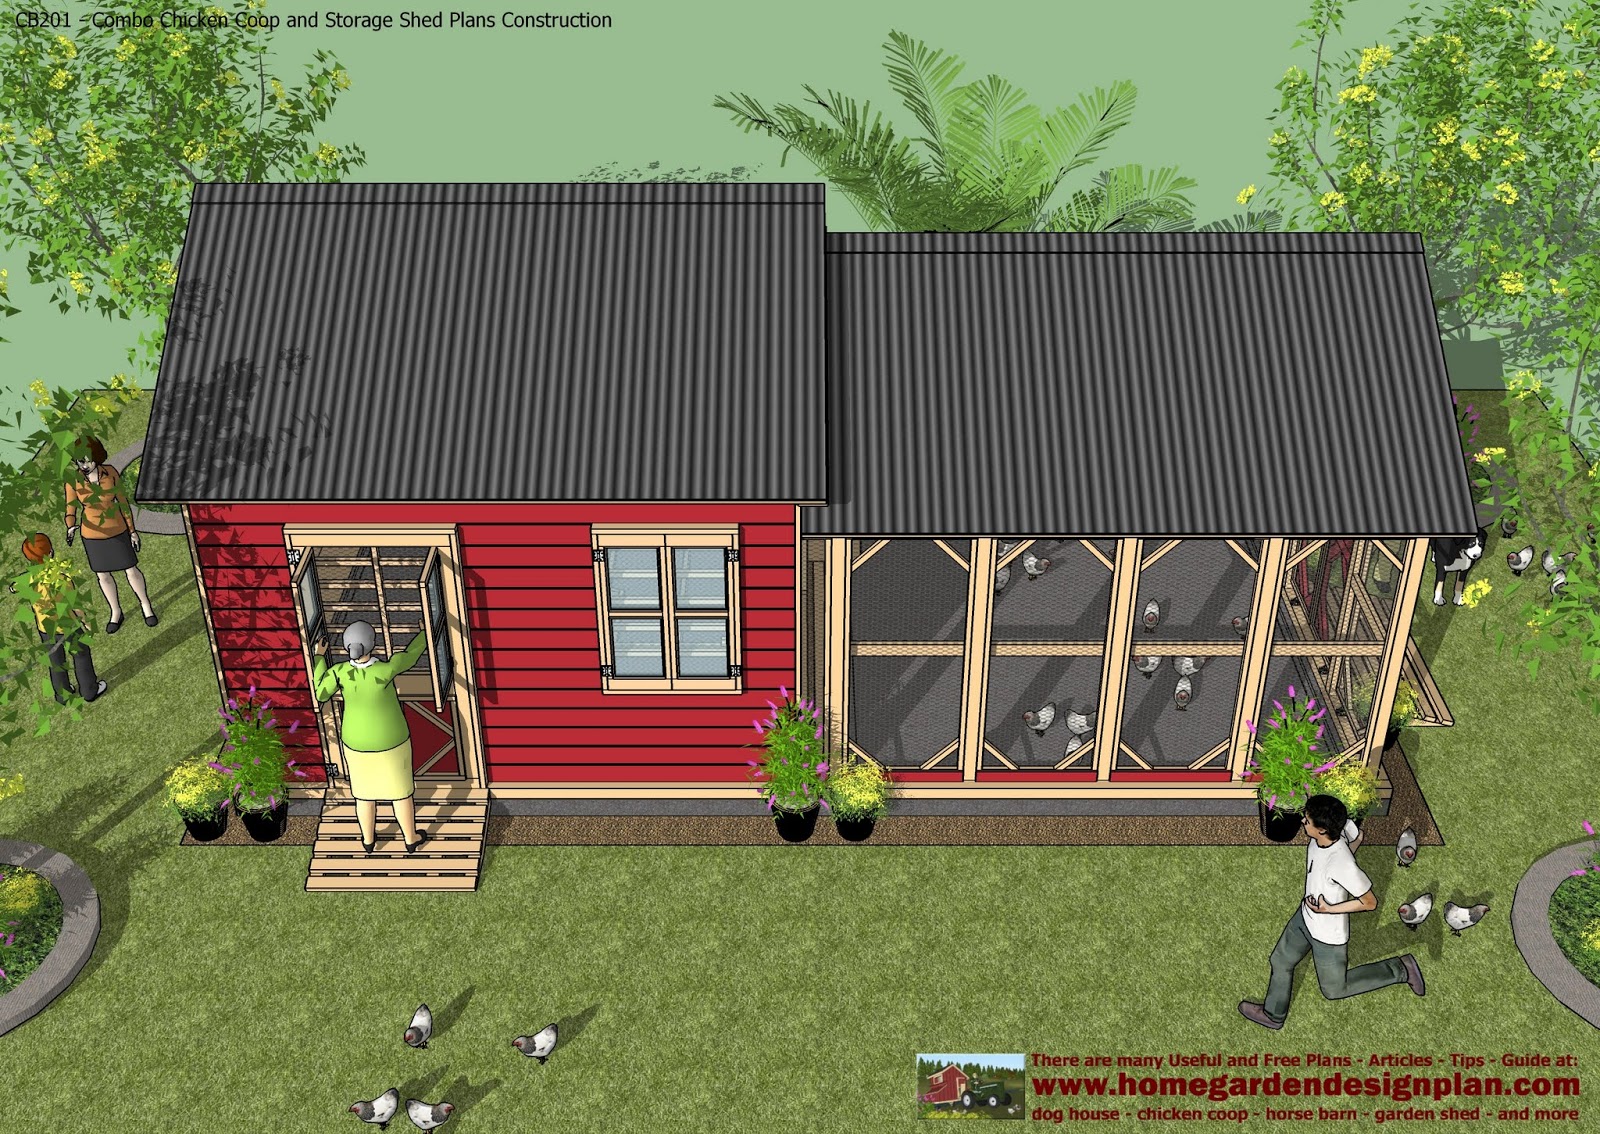  Chicken+Coop+Plans+Construction+%2B+Garden+Sheds+Plans+-+Storage+Sheds